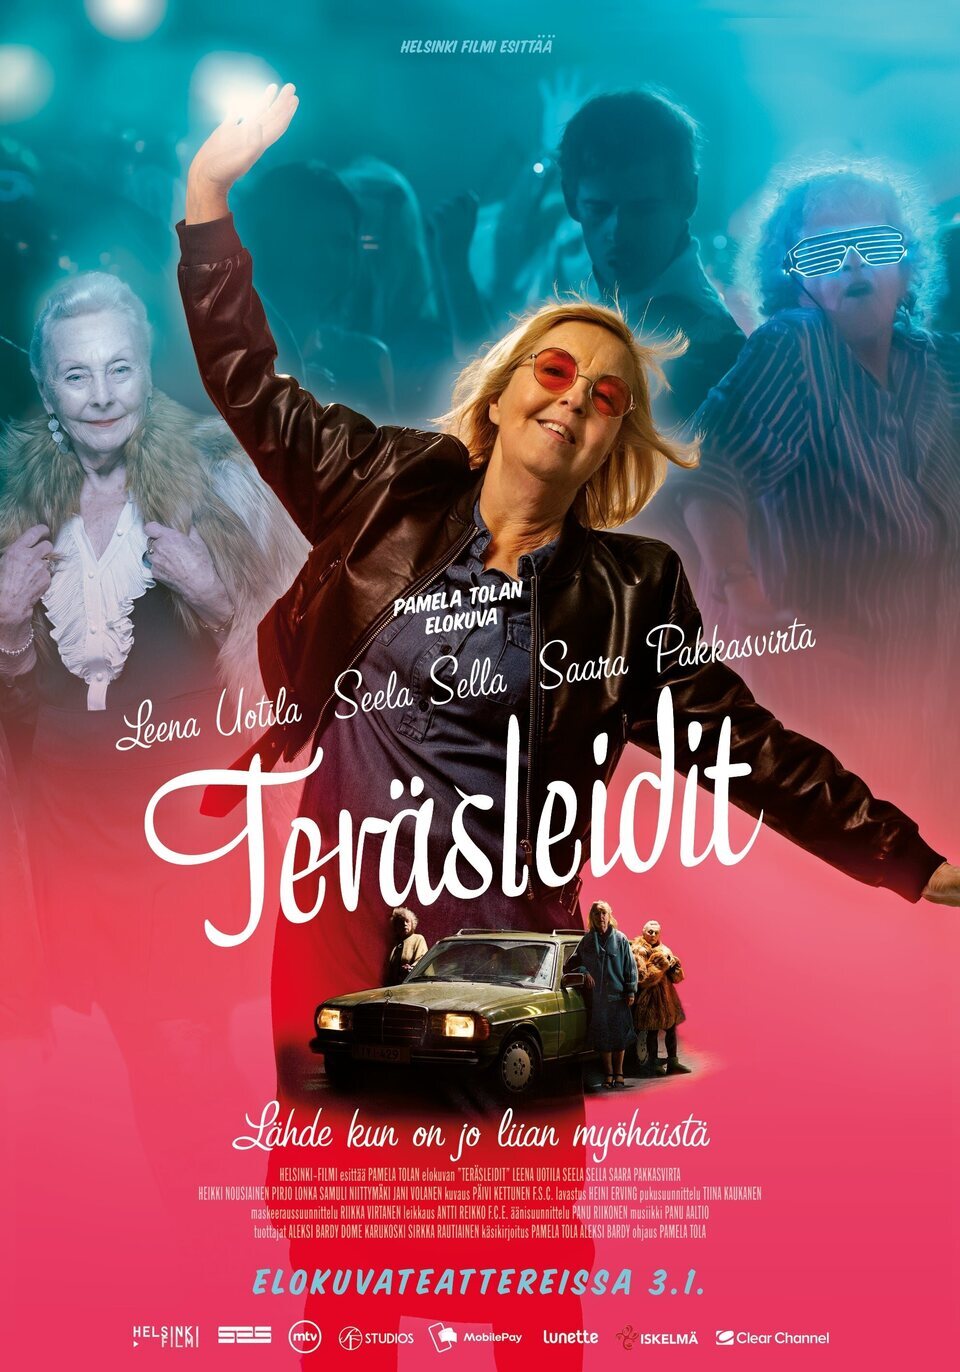 Poster of Ladies of Steel - Finlandia